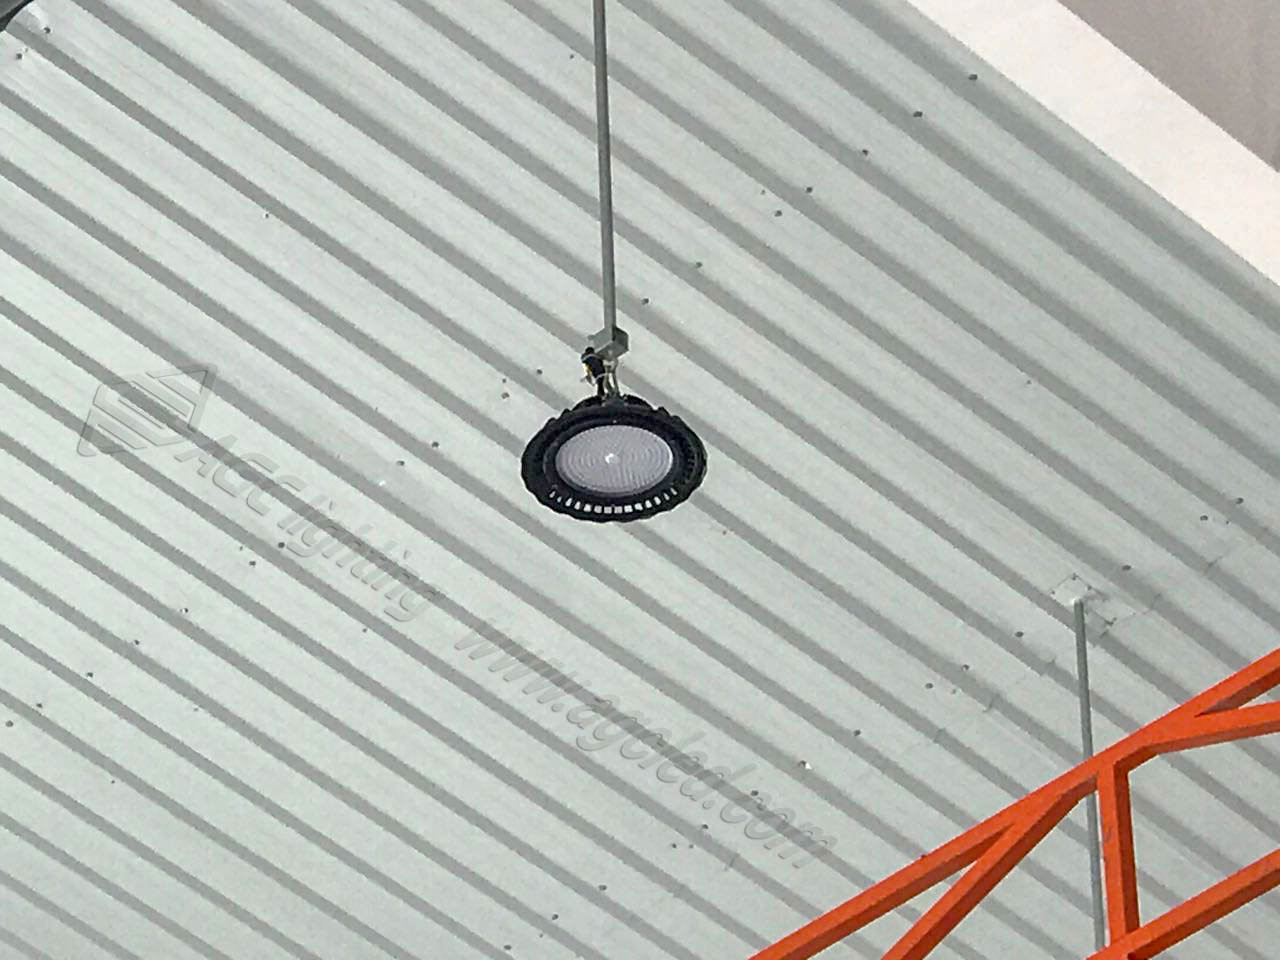 45pcs high bay light for coating factory lighting